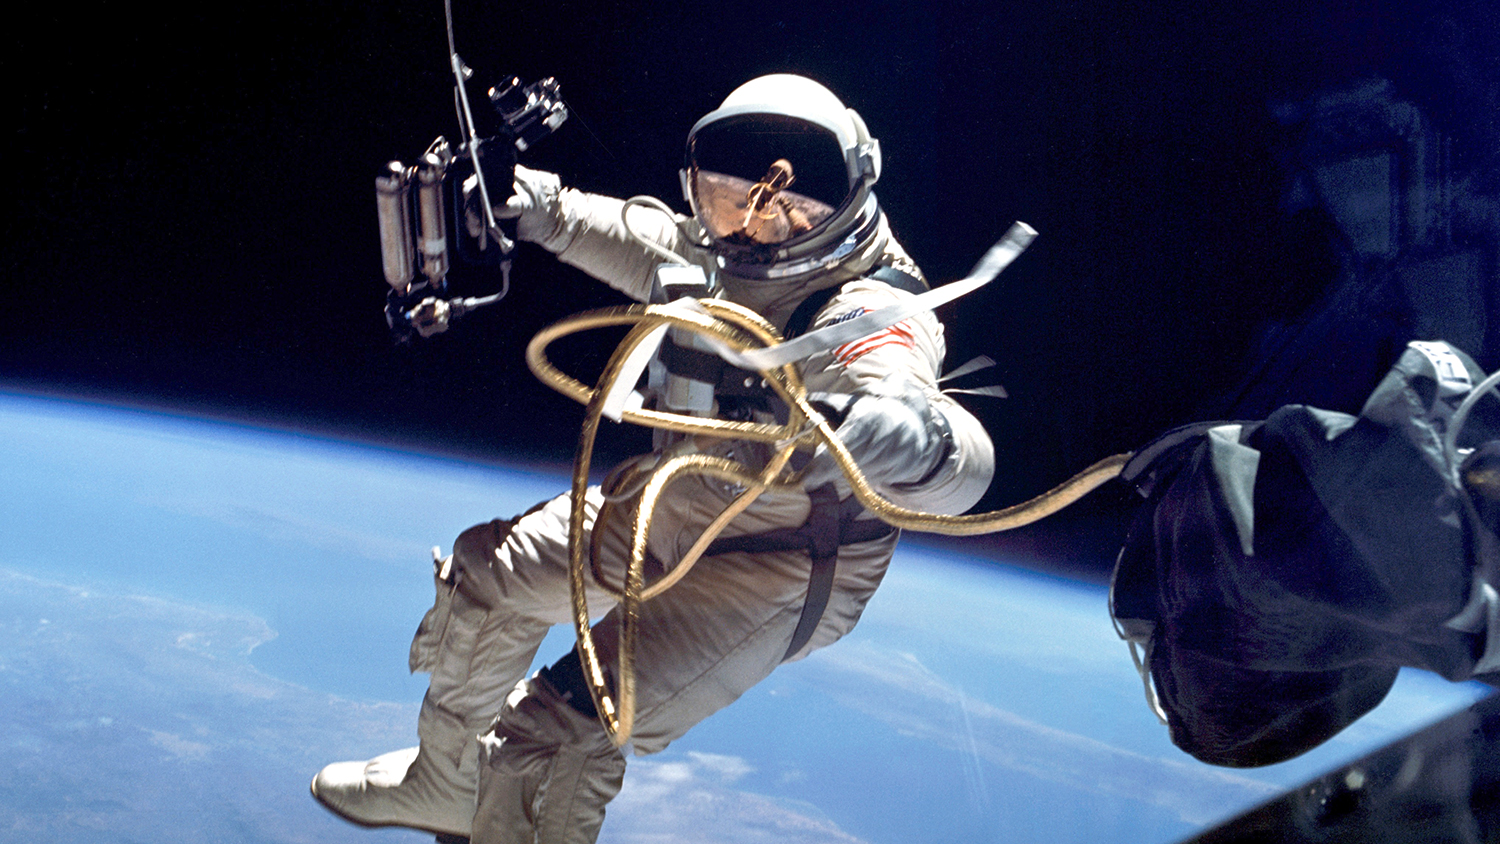 an astronaut on a spacewalk with Earth behind him